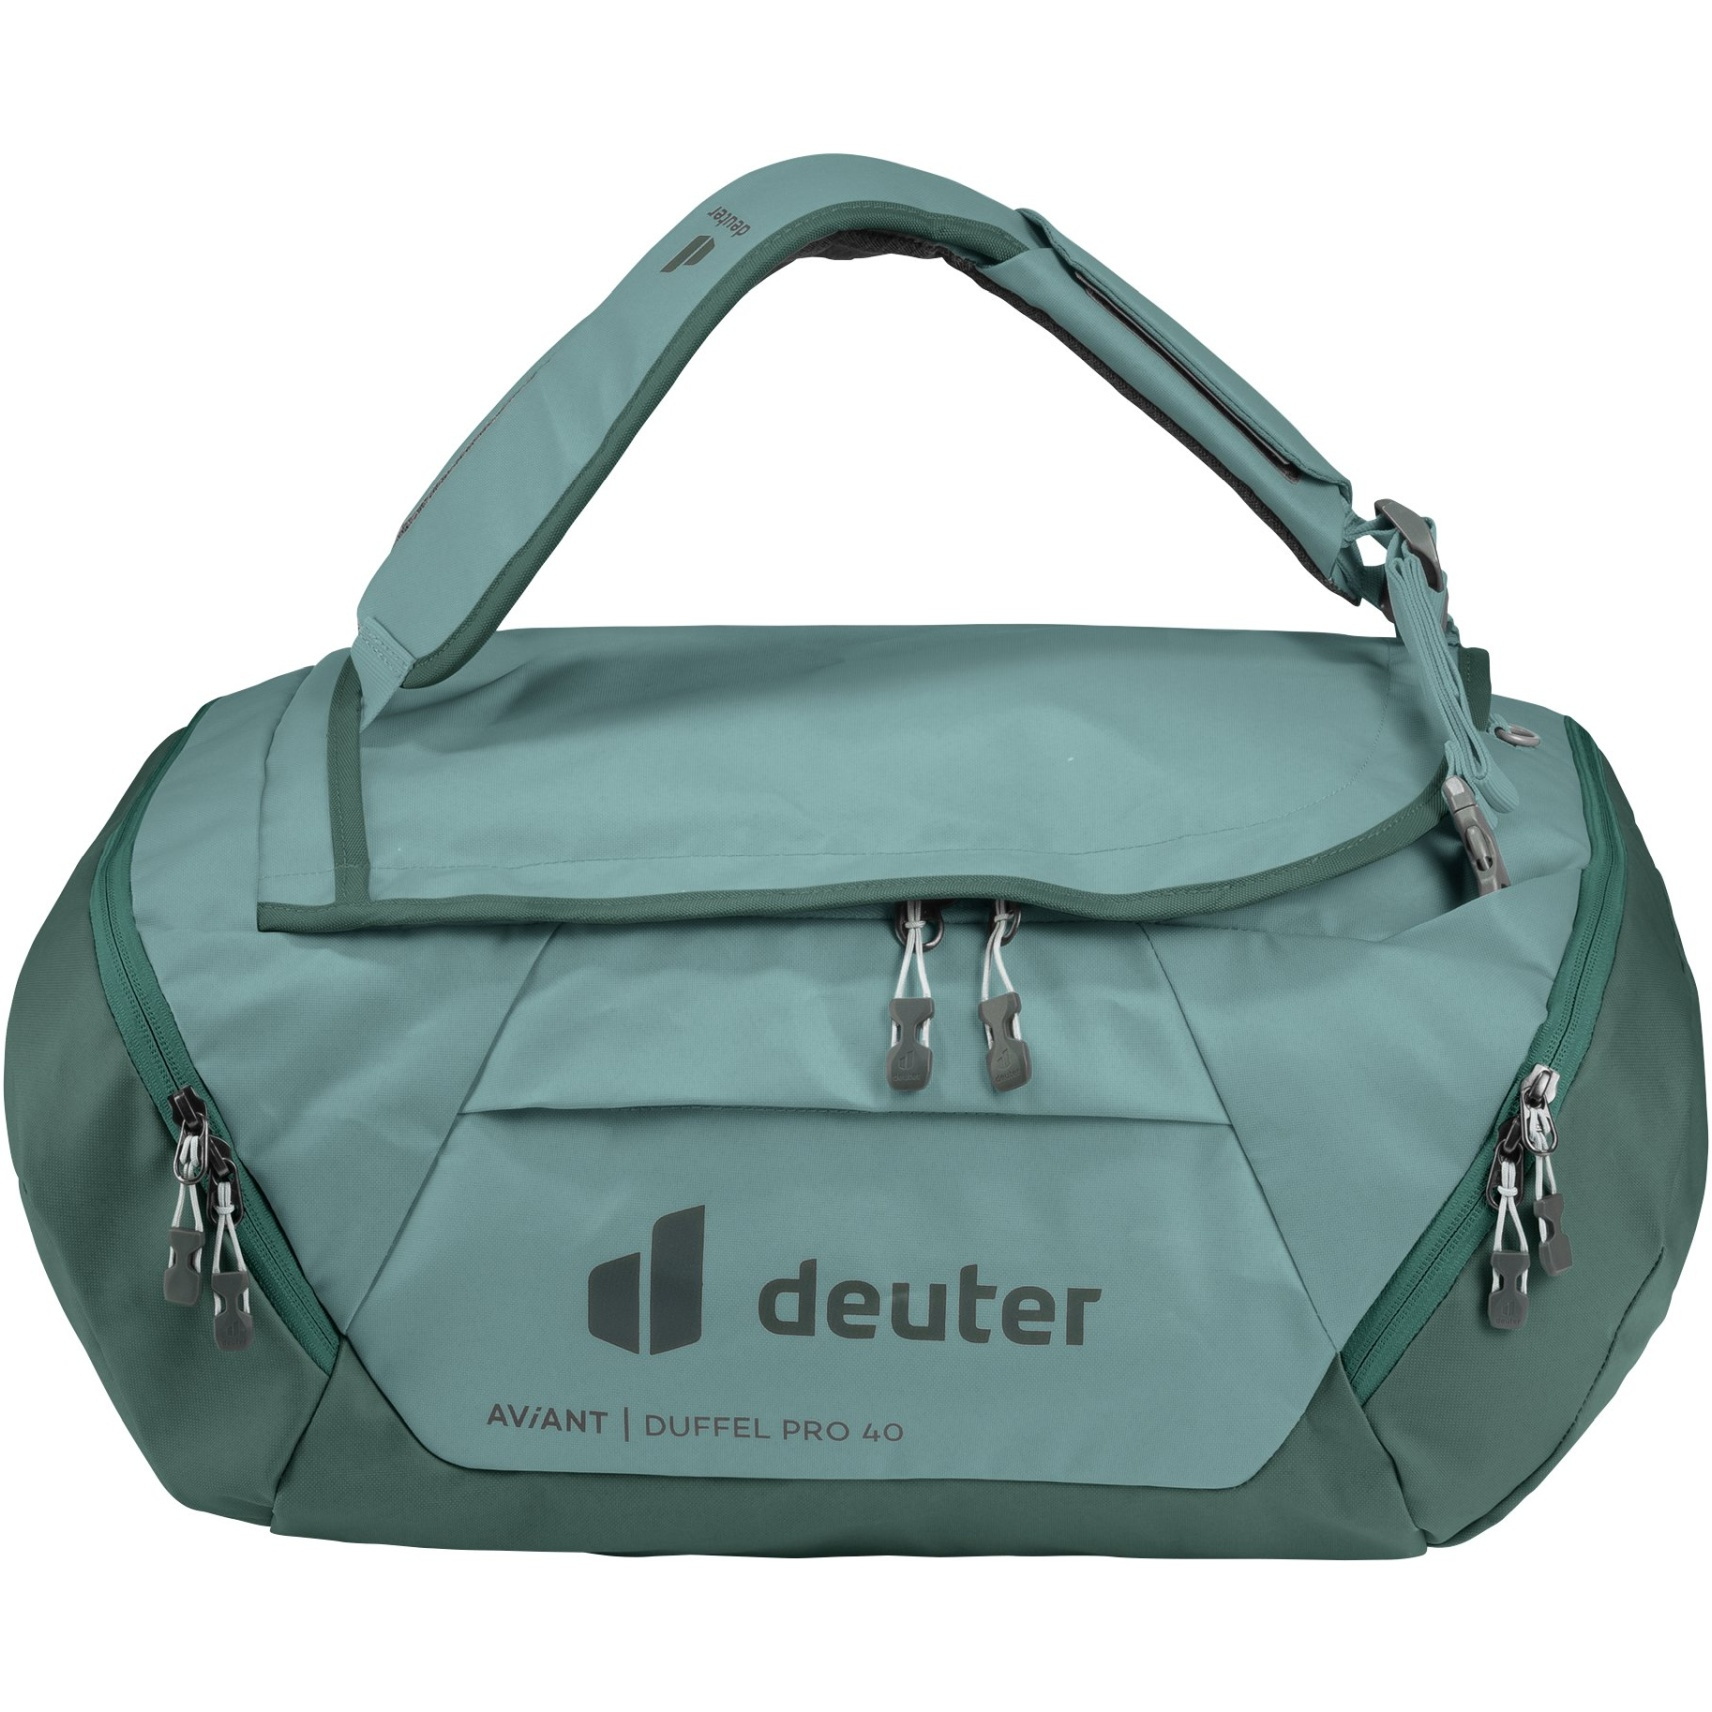 40 Deuter Pro AViANT jade-seagreen | BIKE24 - Duffel Reisetasche